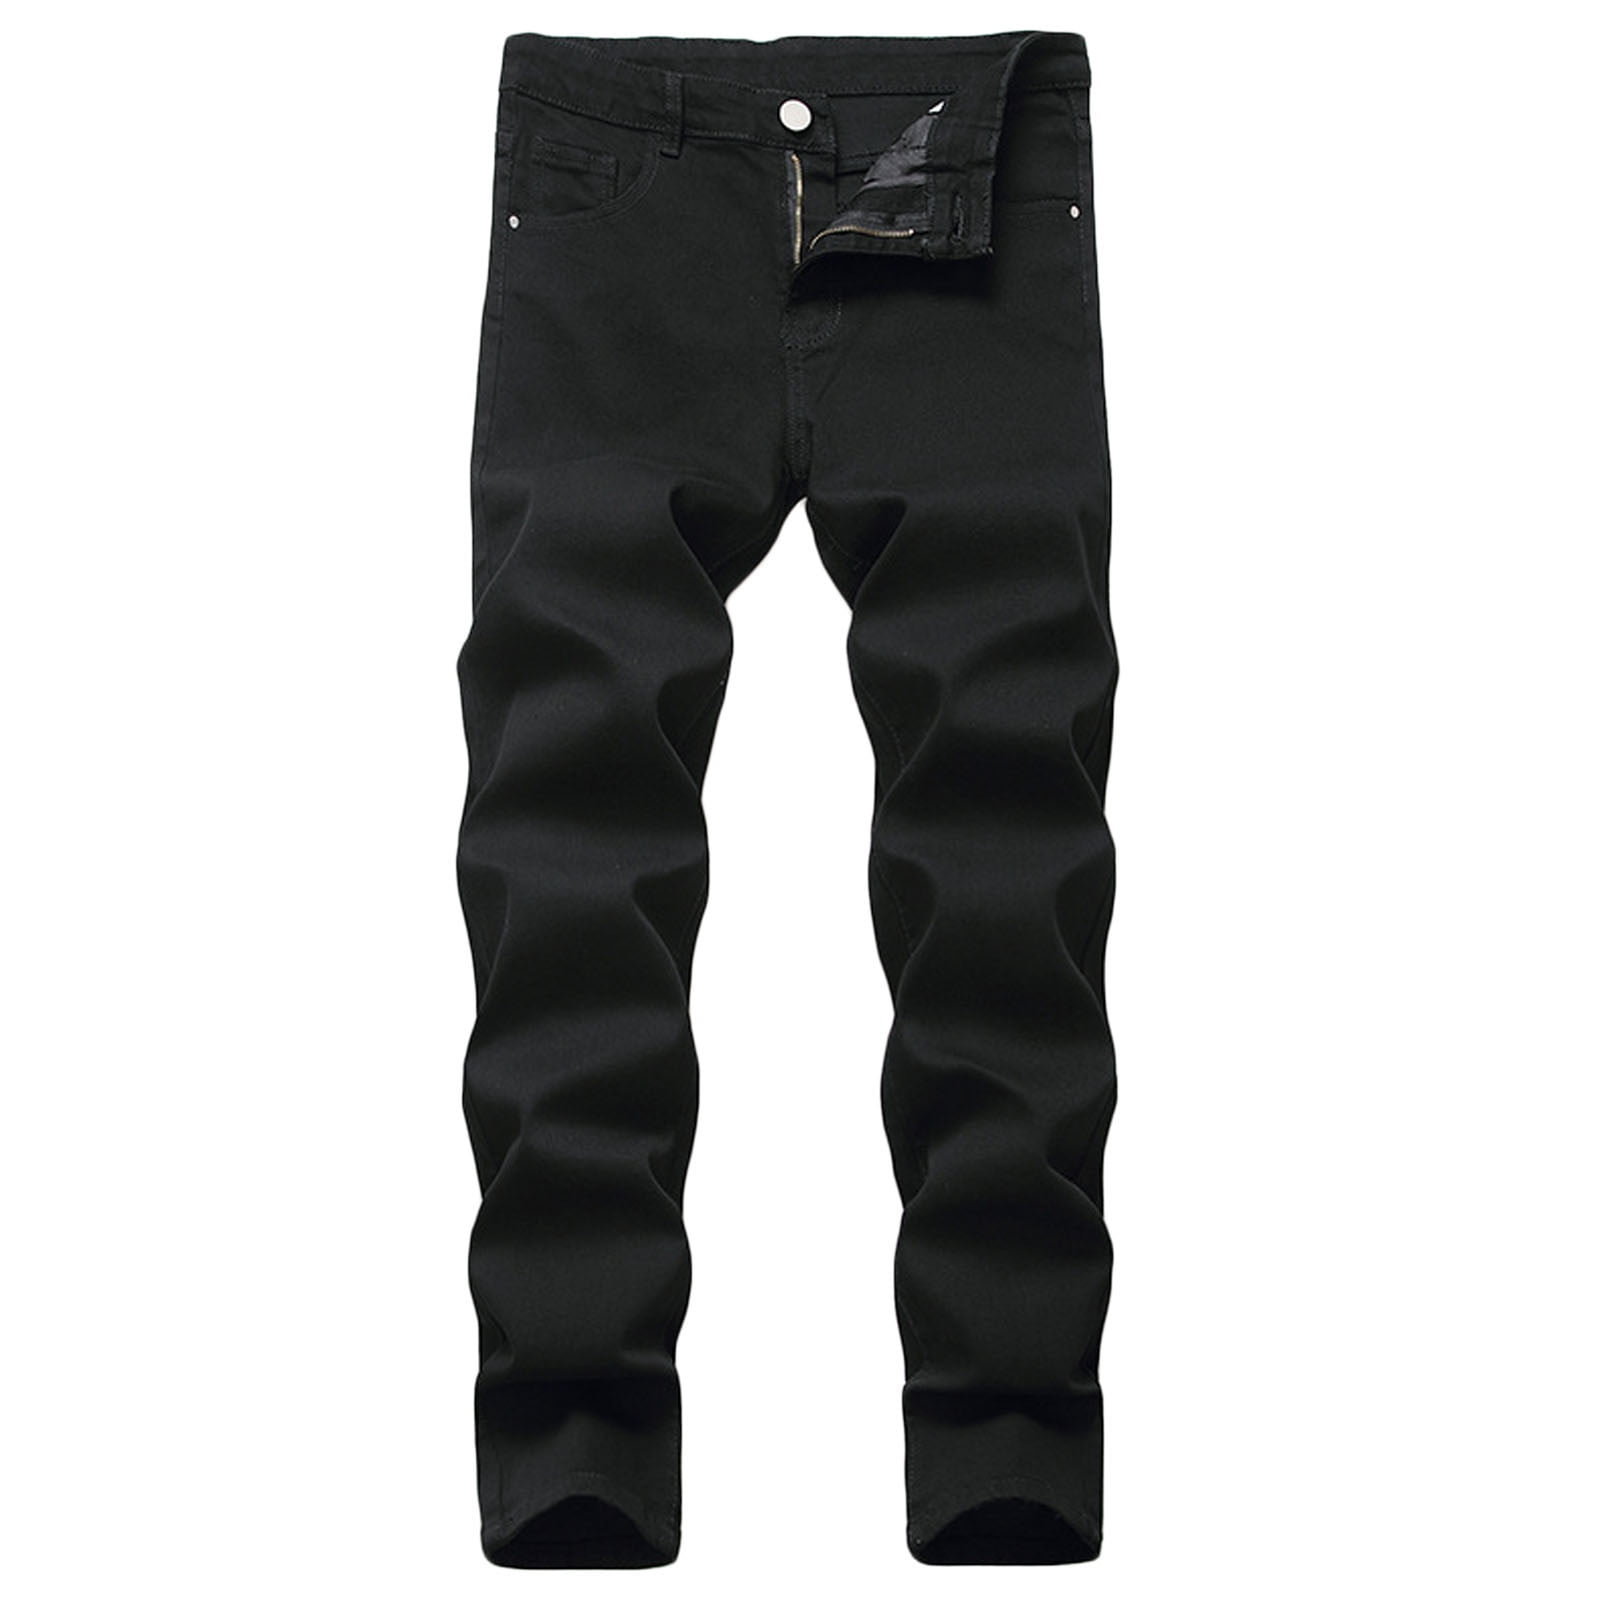 XFLWAM Men's Skinny Jeans Fashion Casual Slim Fit Stretch Cotton Denim ...